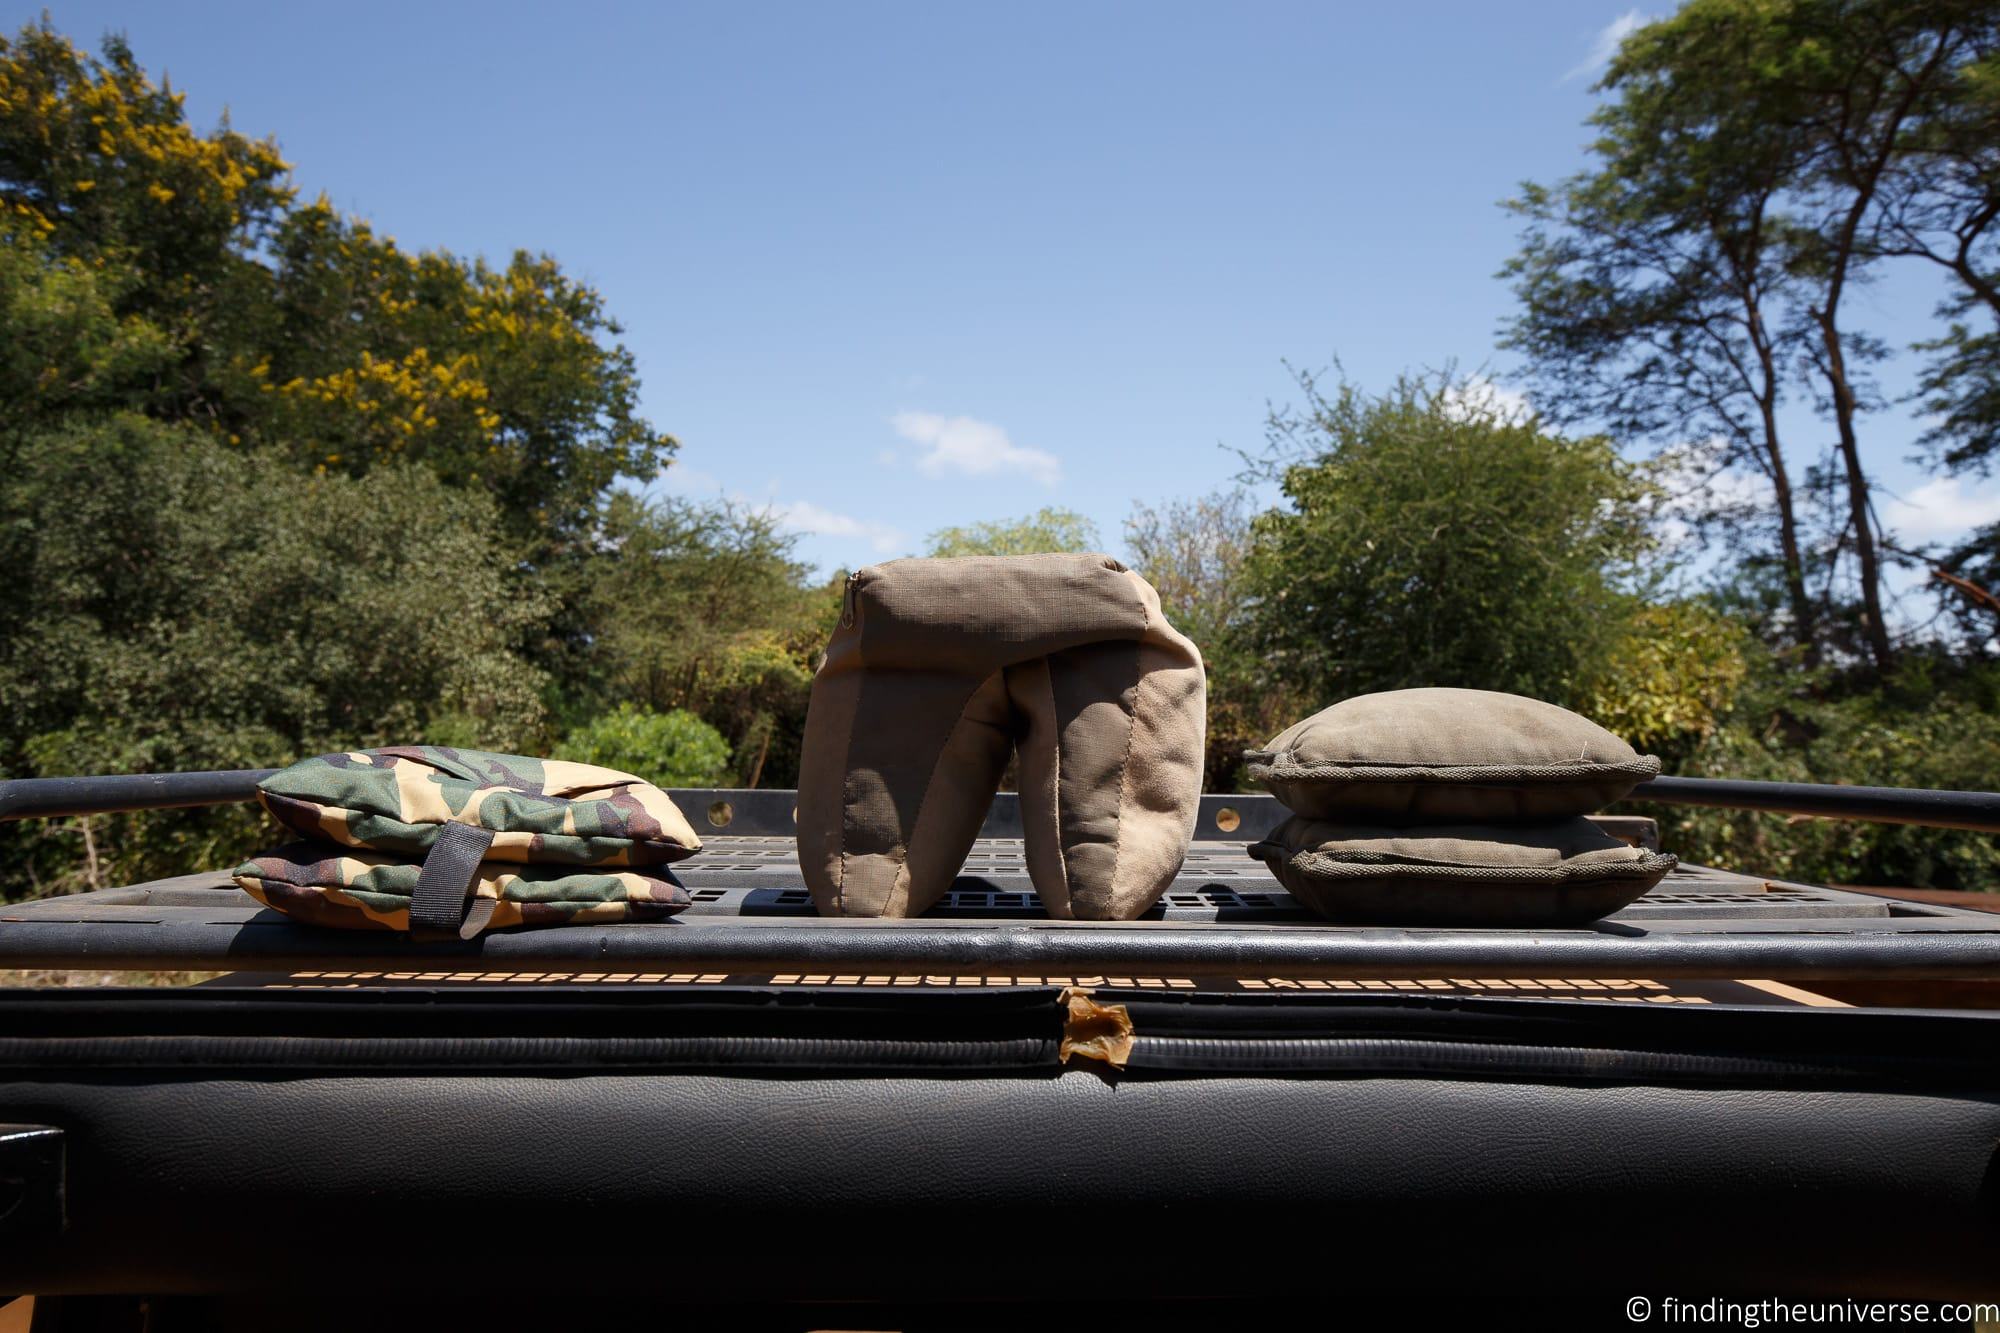 Photography bean bags for safari